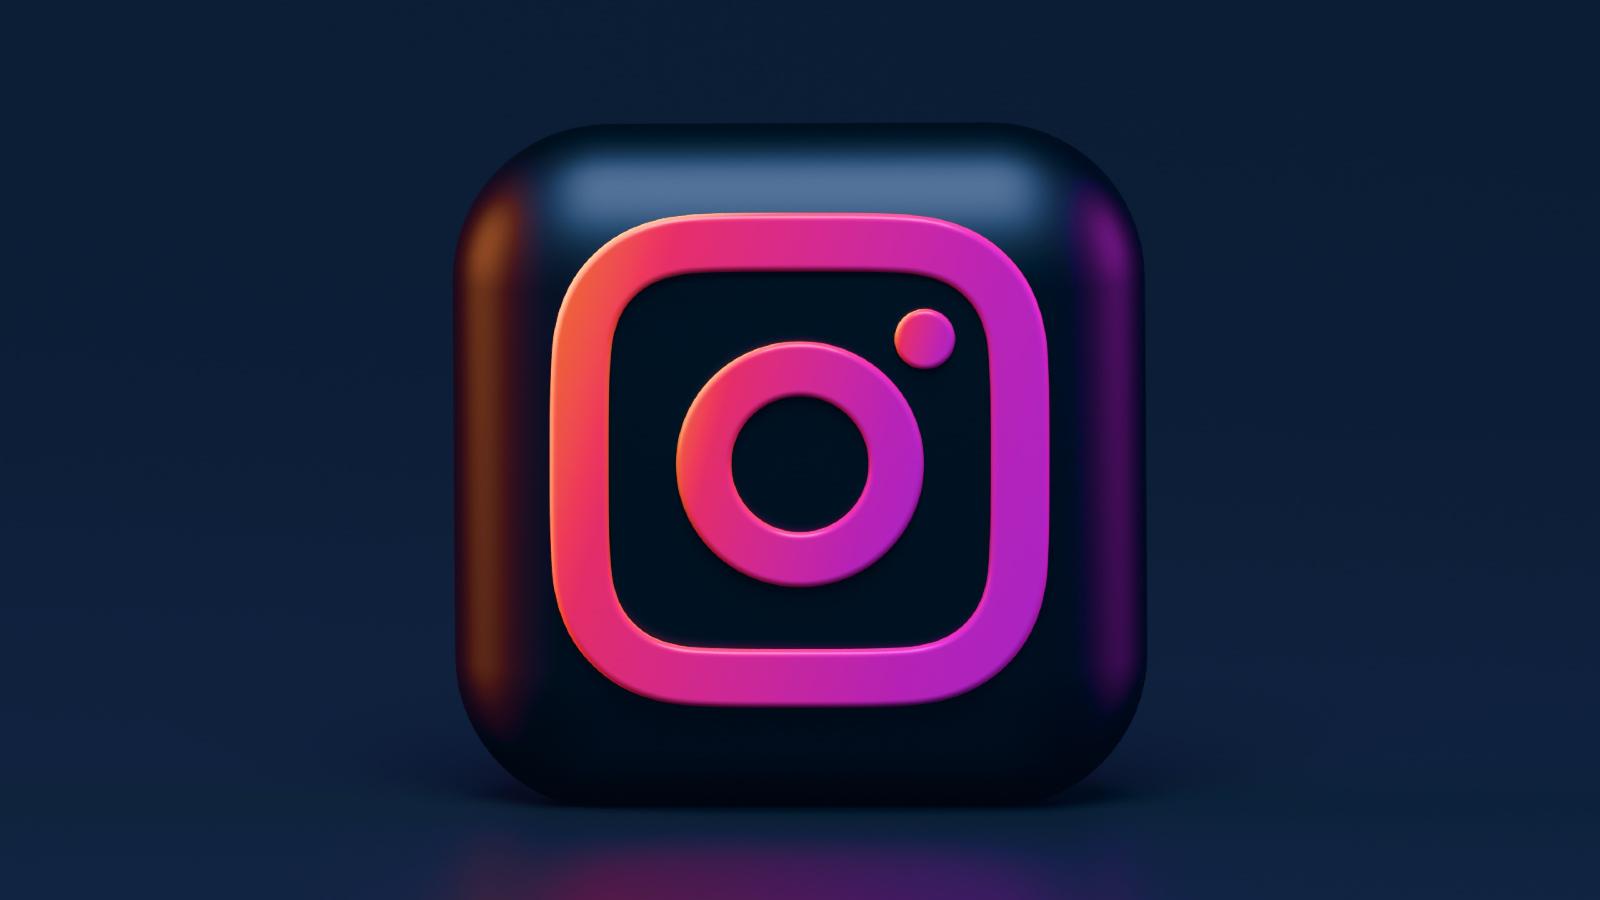 Most followed Instagram accounts